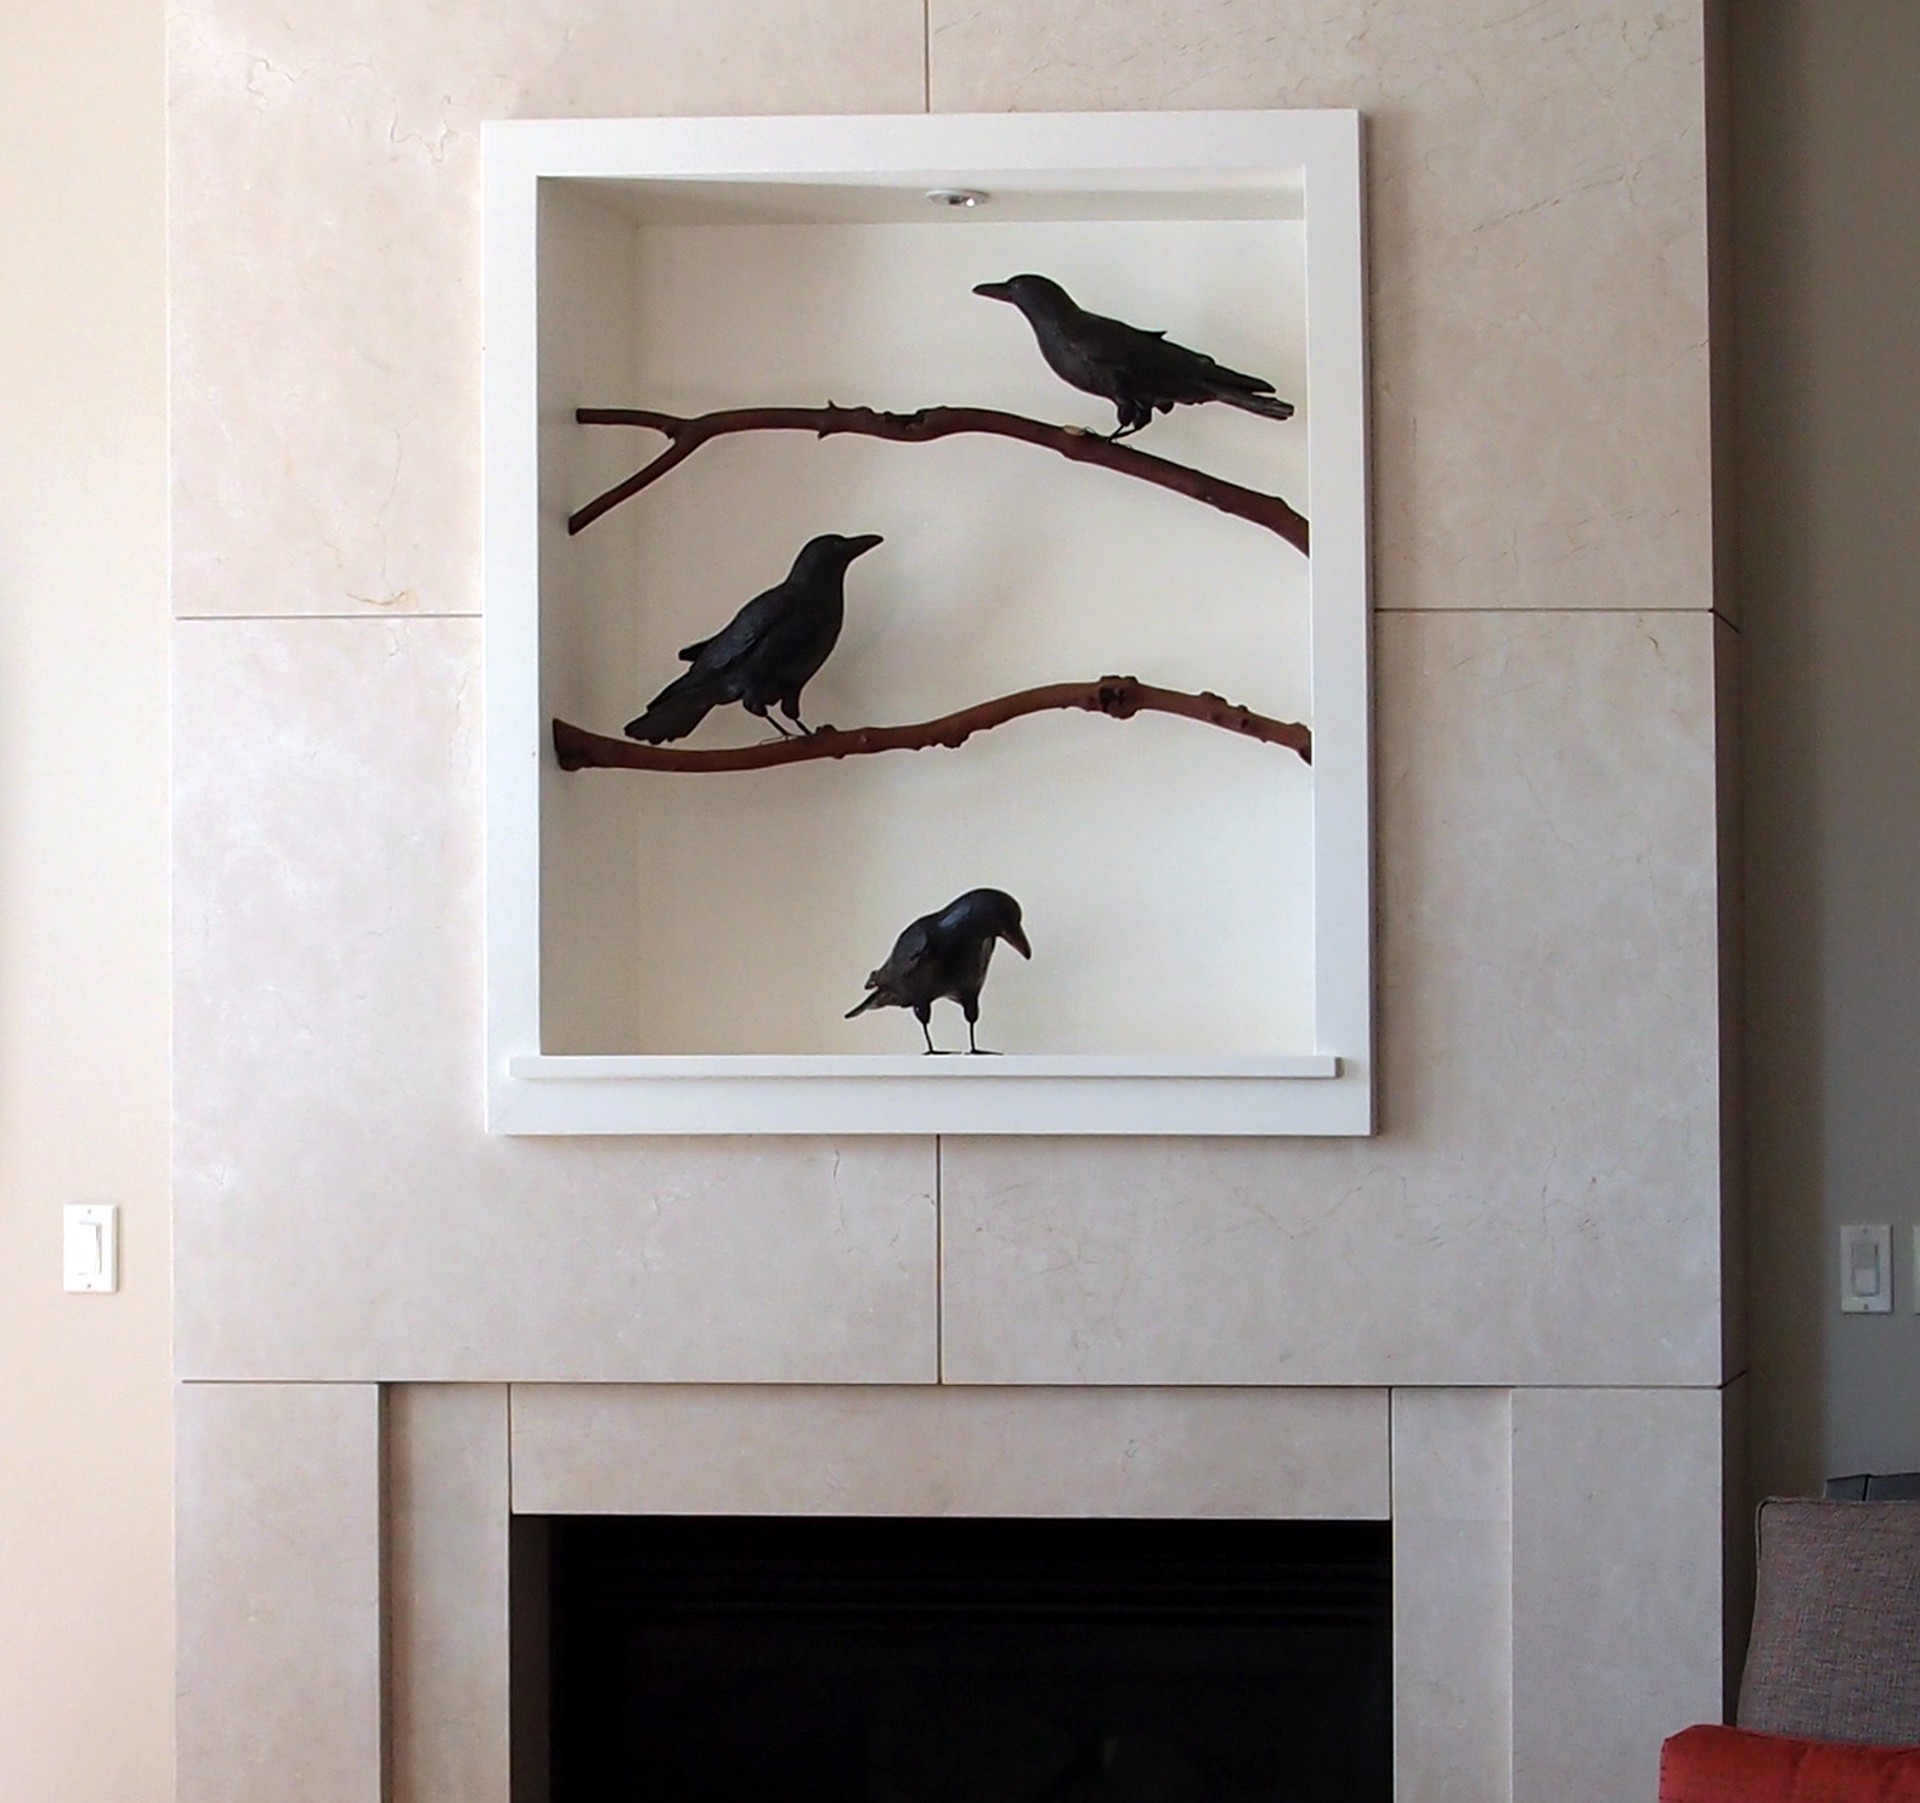 Three Crows by Elaine Hanowell